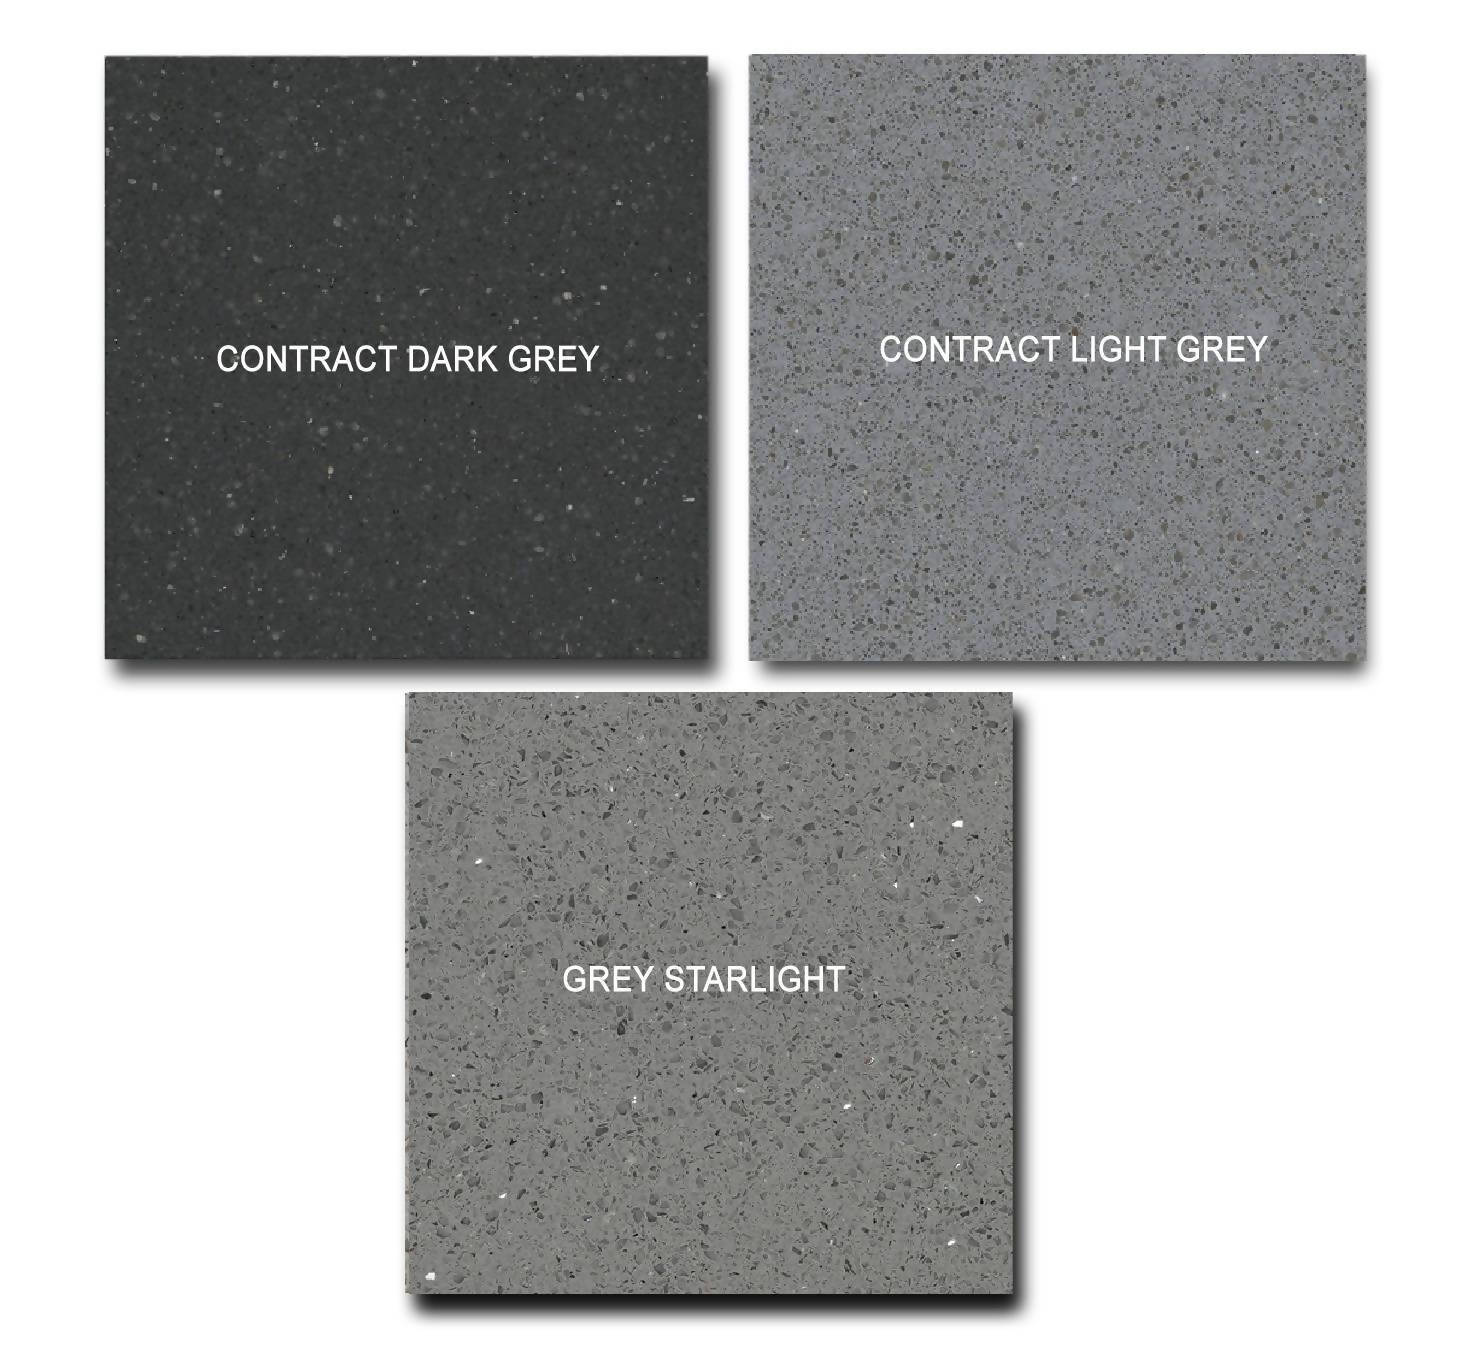 DARK GREY CONTRACT QUARTZ,Quartz,Blyth Marble Ltd,www.work-tops.com